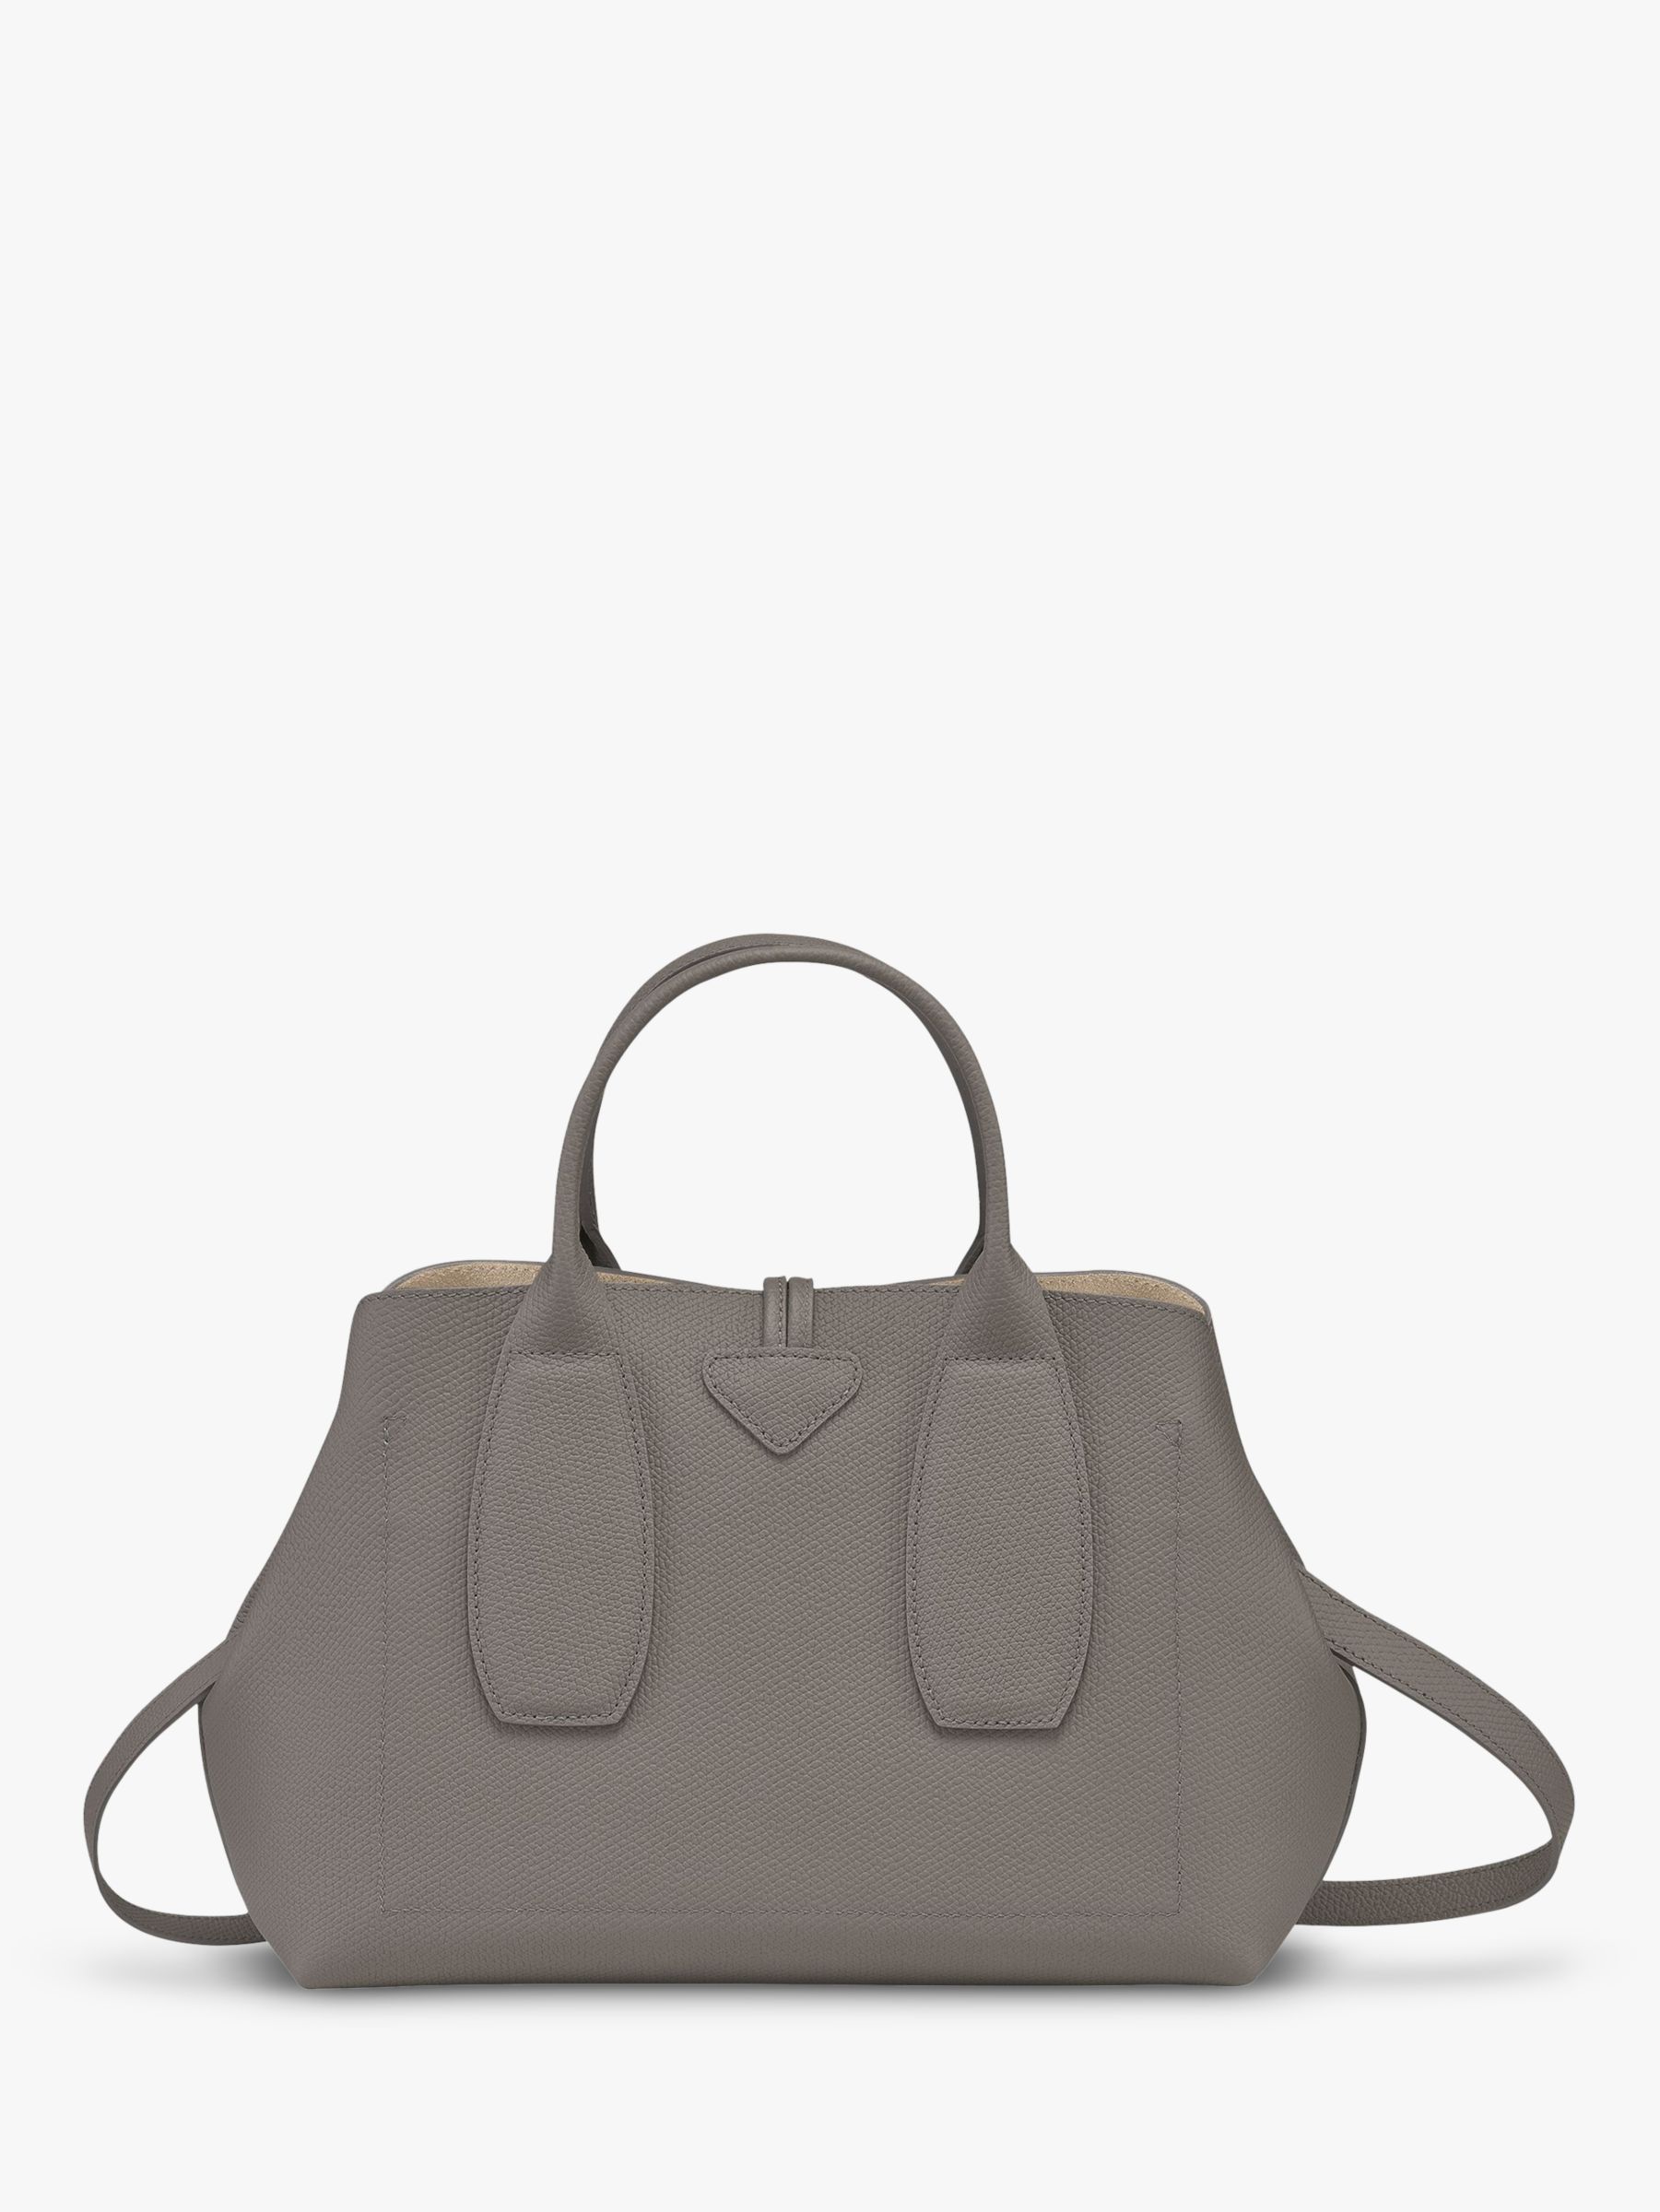 Longchamp Roseau Medium Leather Top Handle Bag, Turtledove